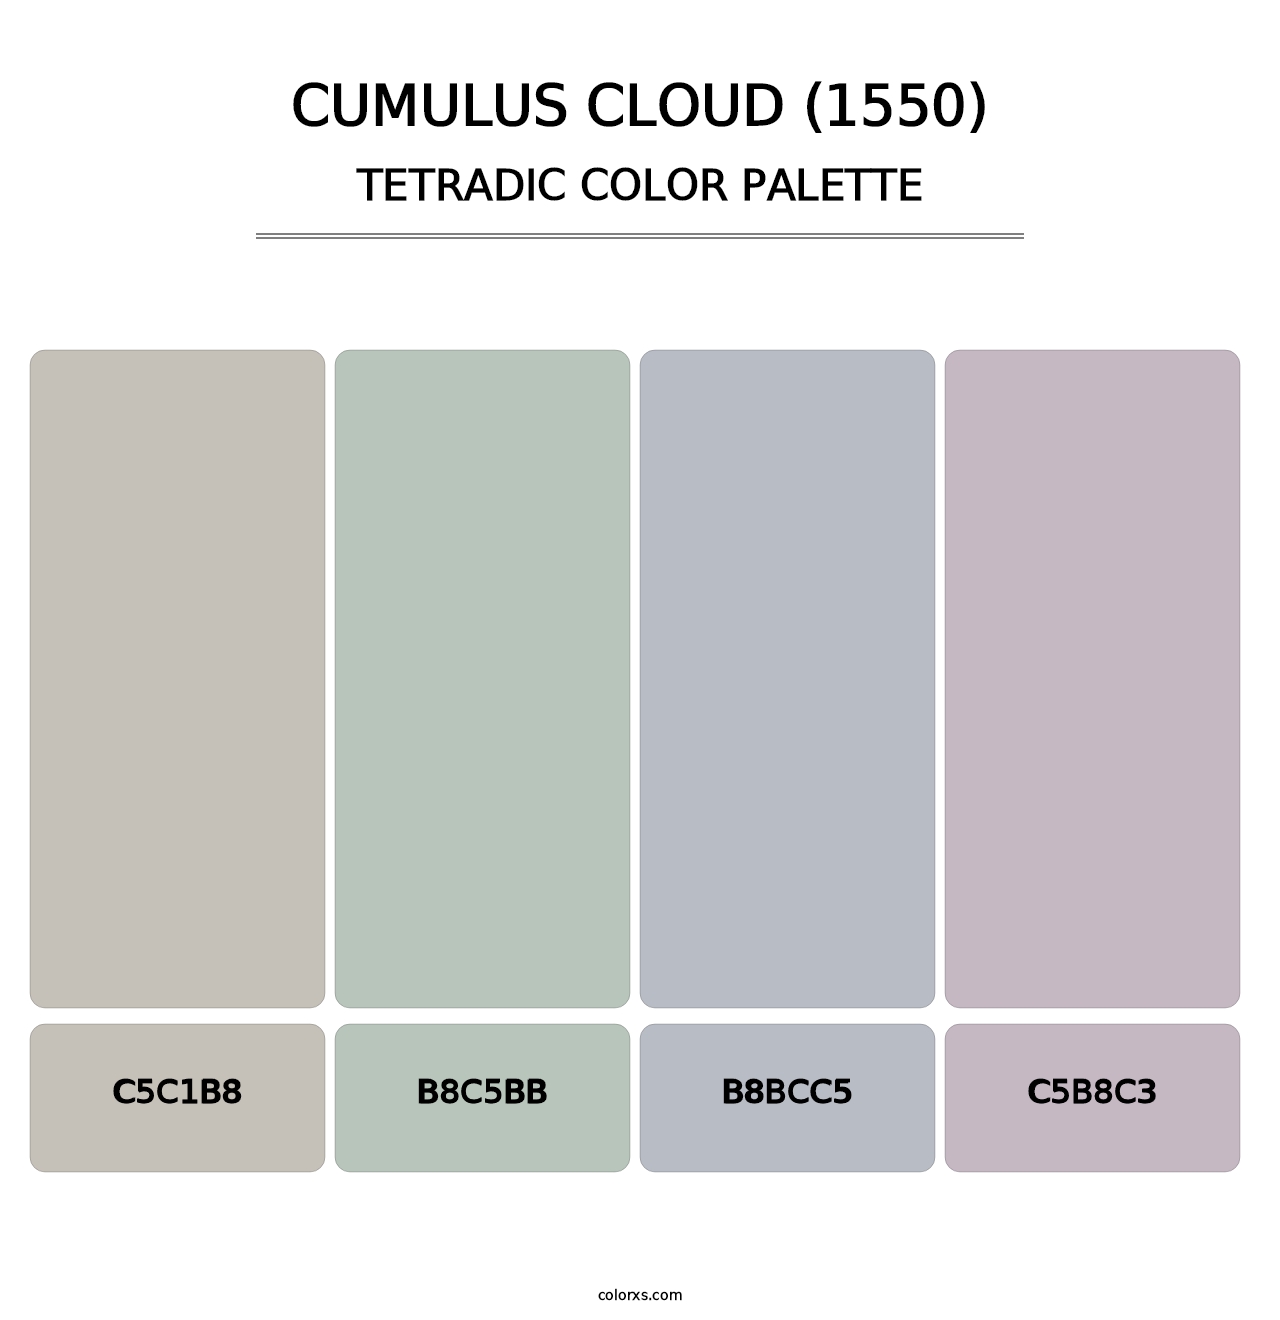 Cumulus Cloud (1550) - Tetradic Color Palette